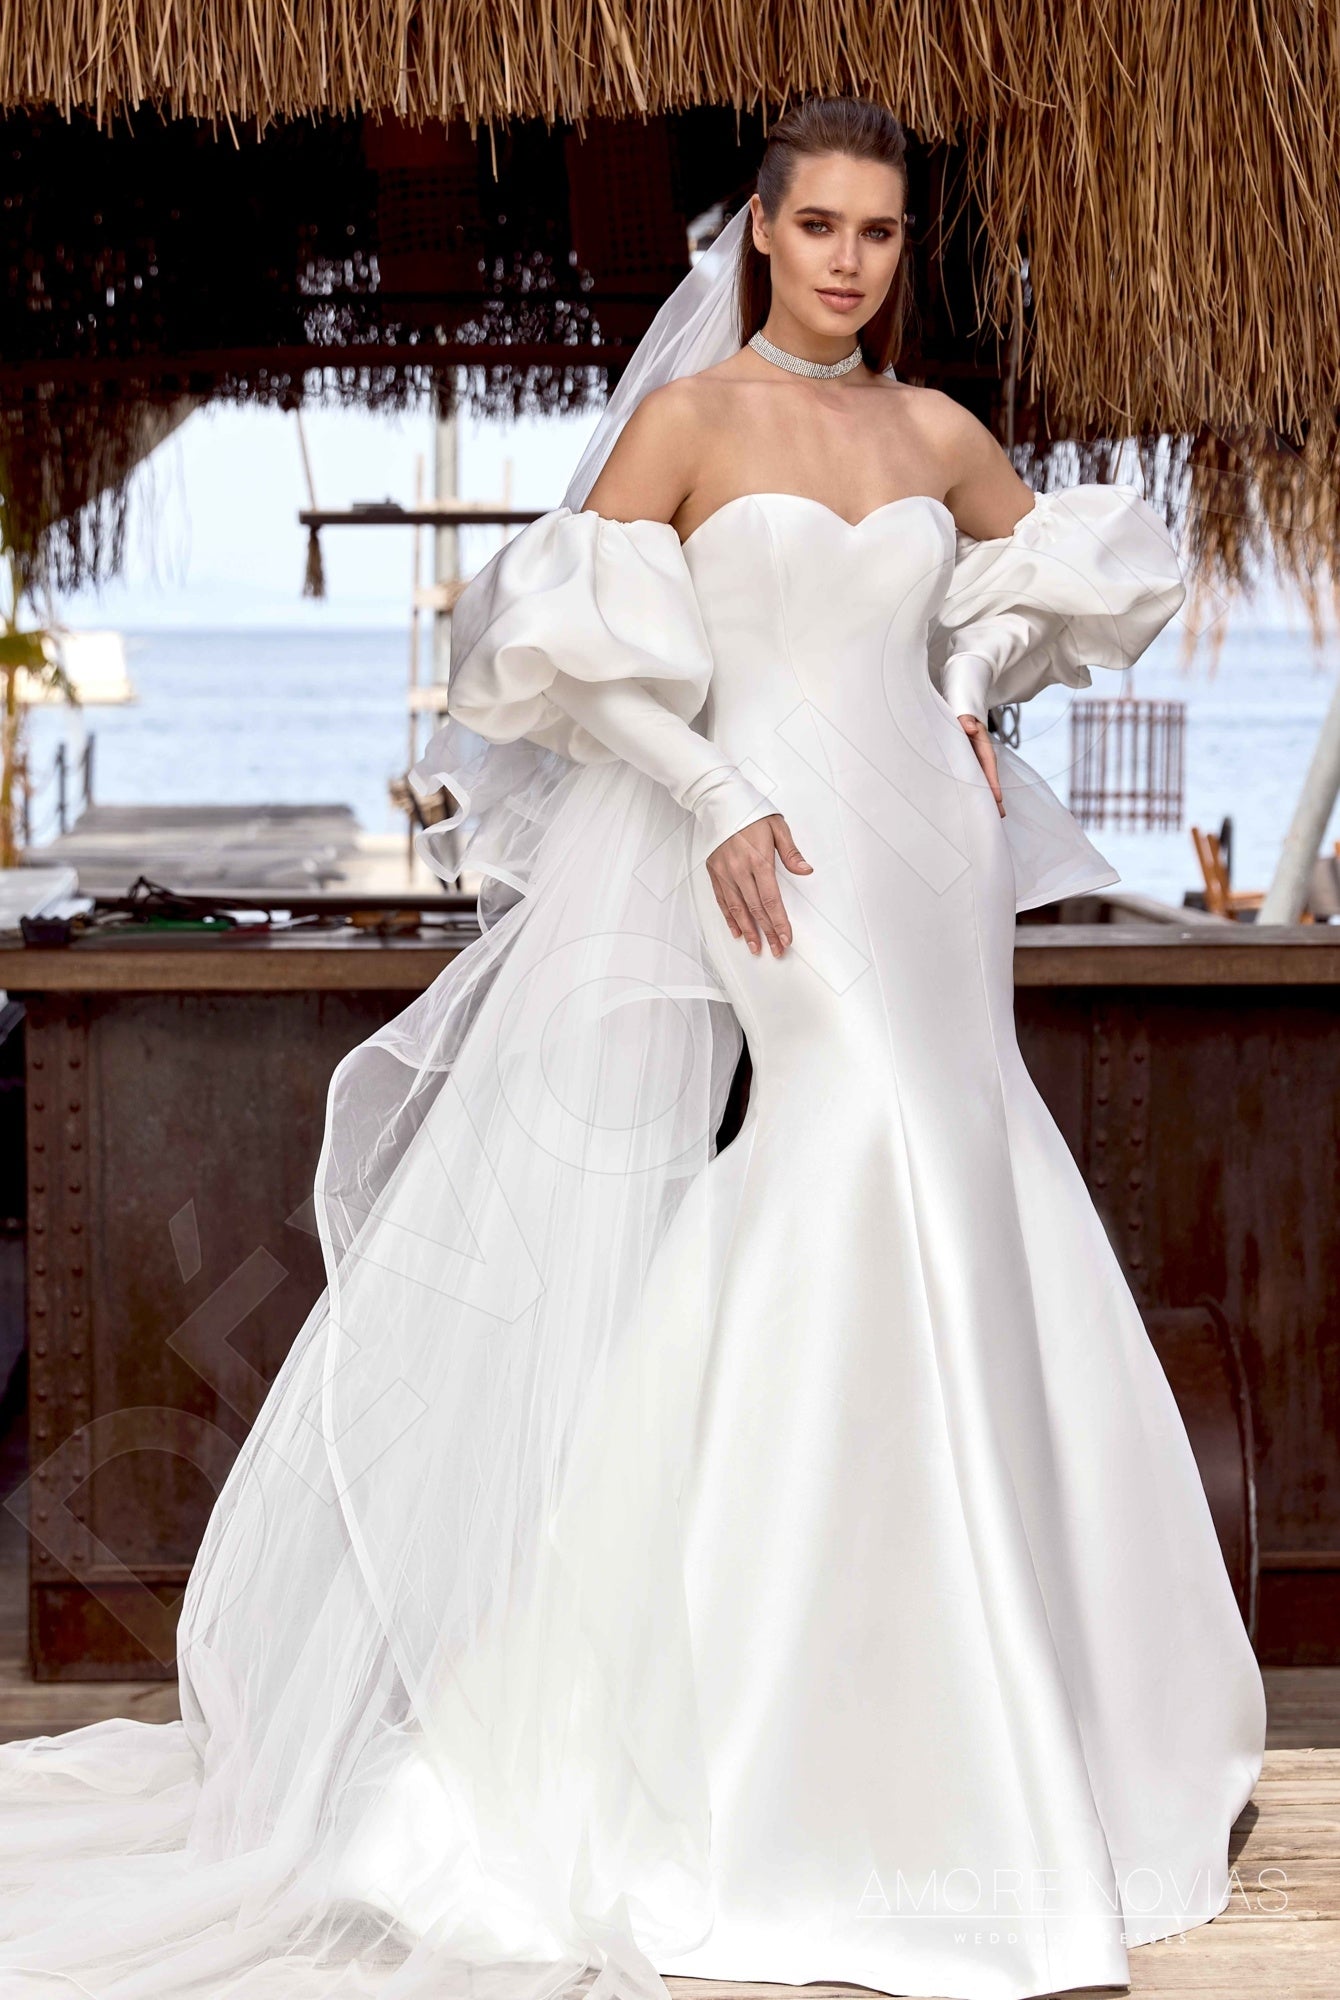 Steph Trumpet/Mermaid Sweetheart Ivory Wedding dress